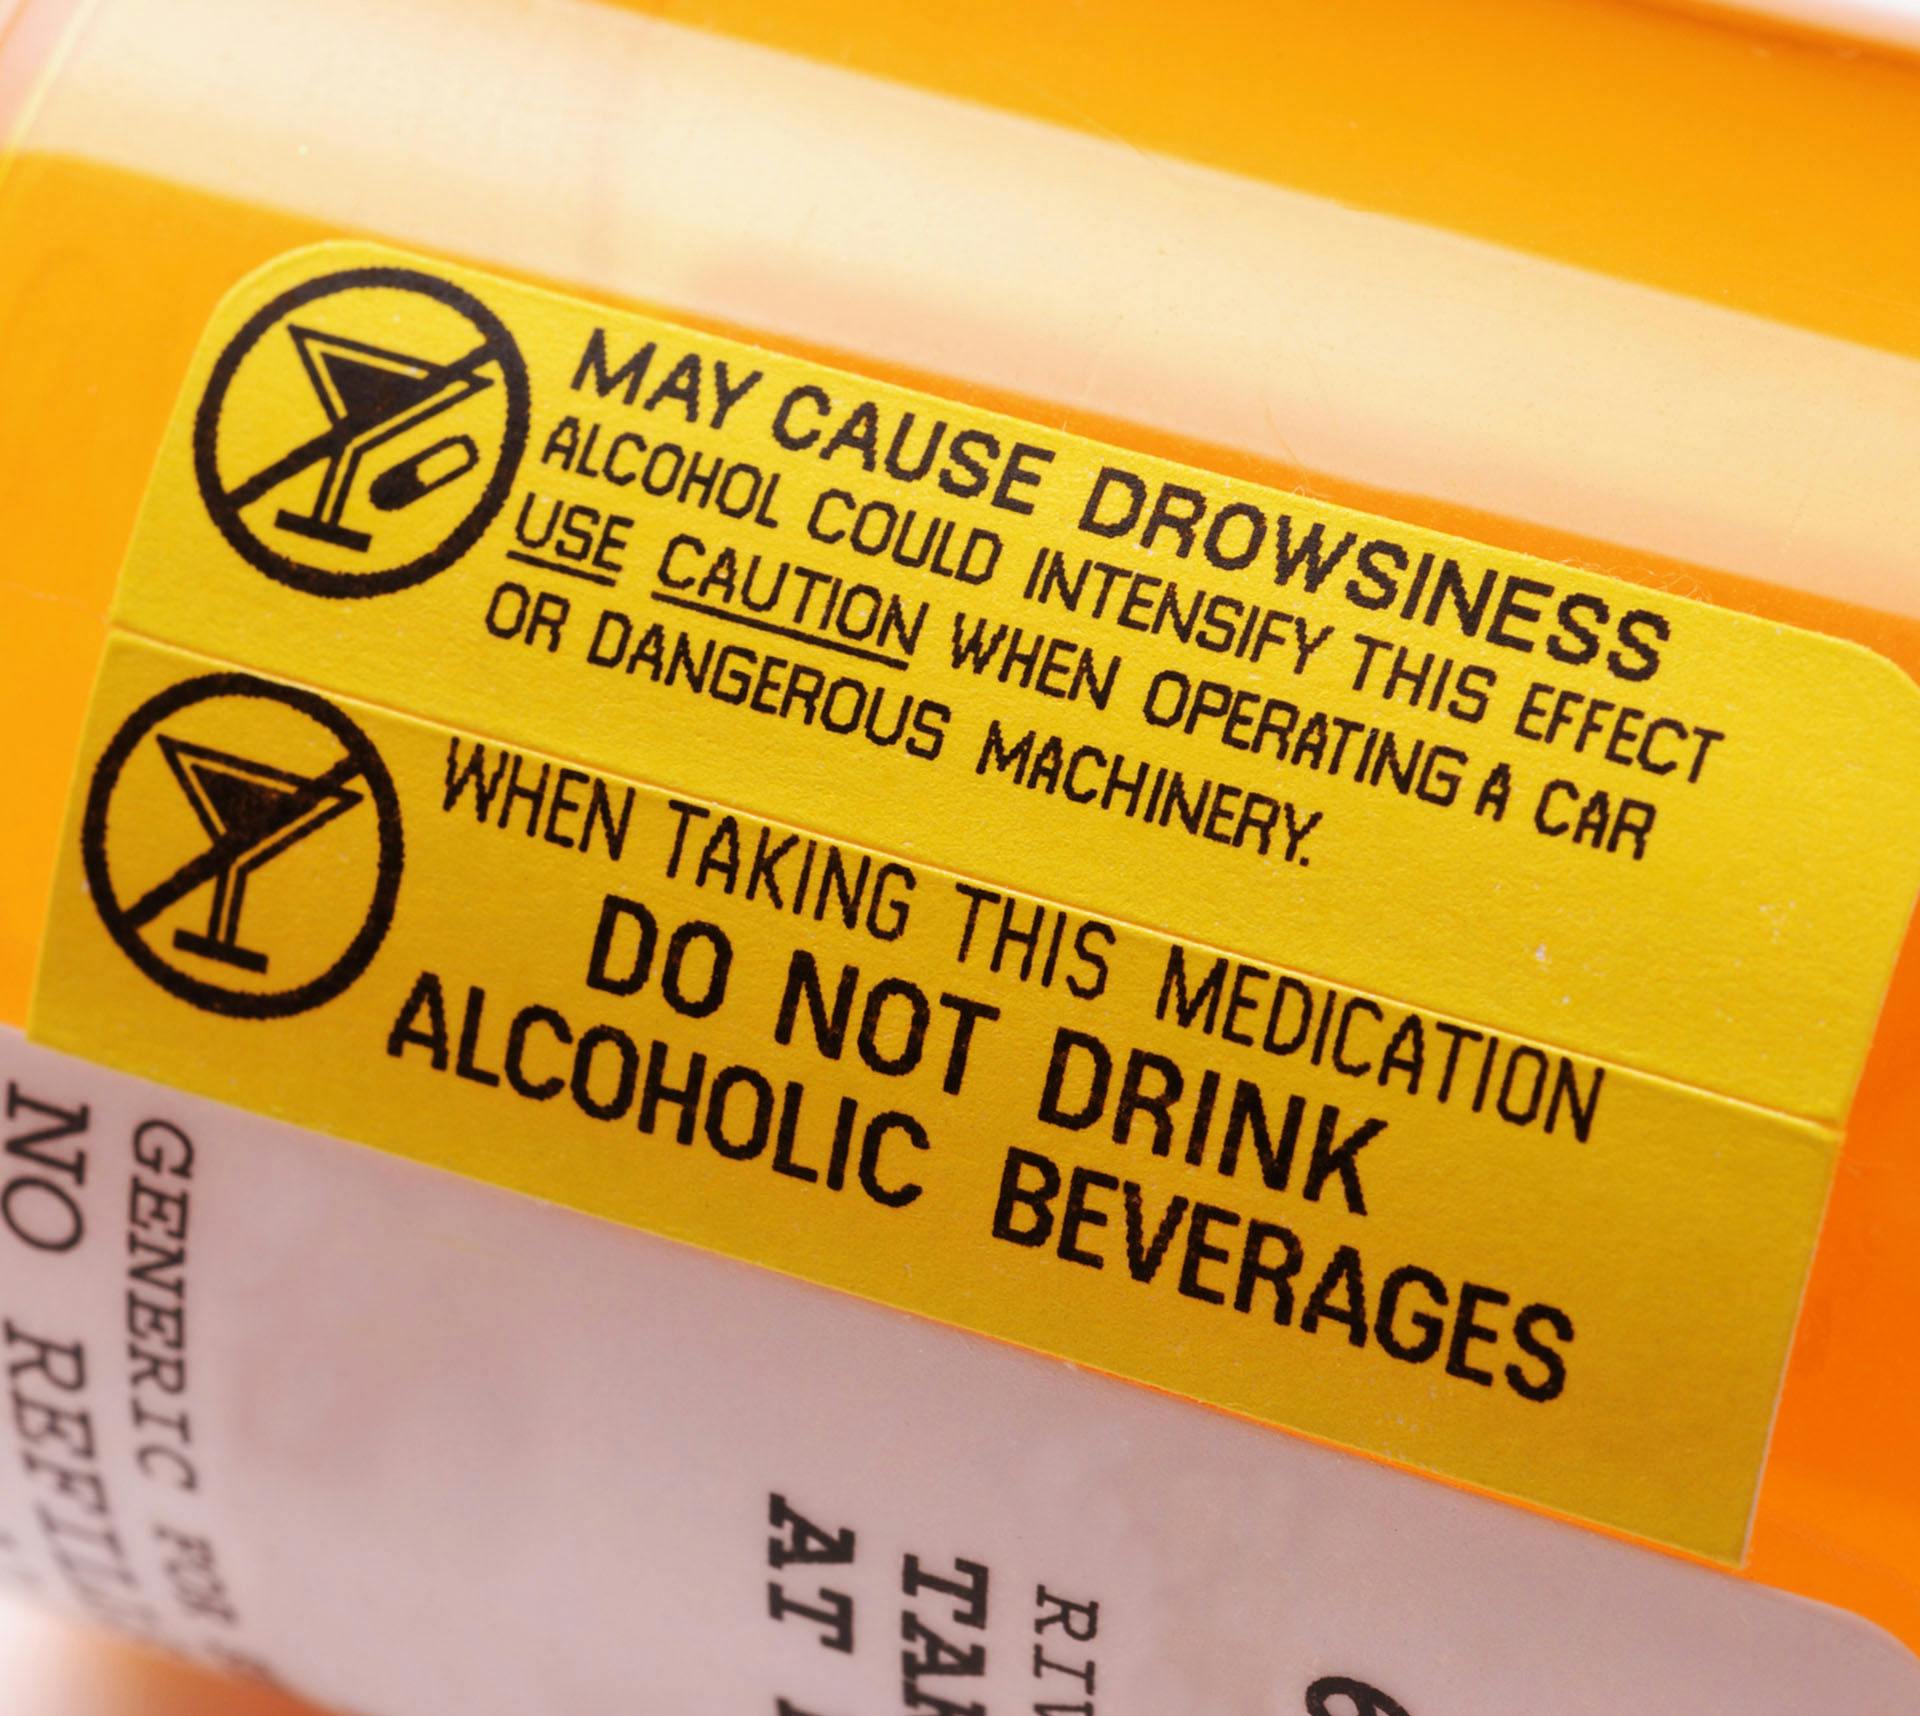 Medication warning label